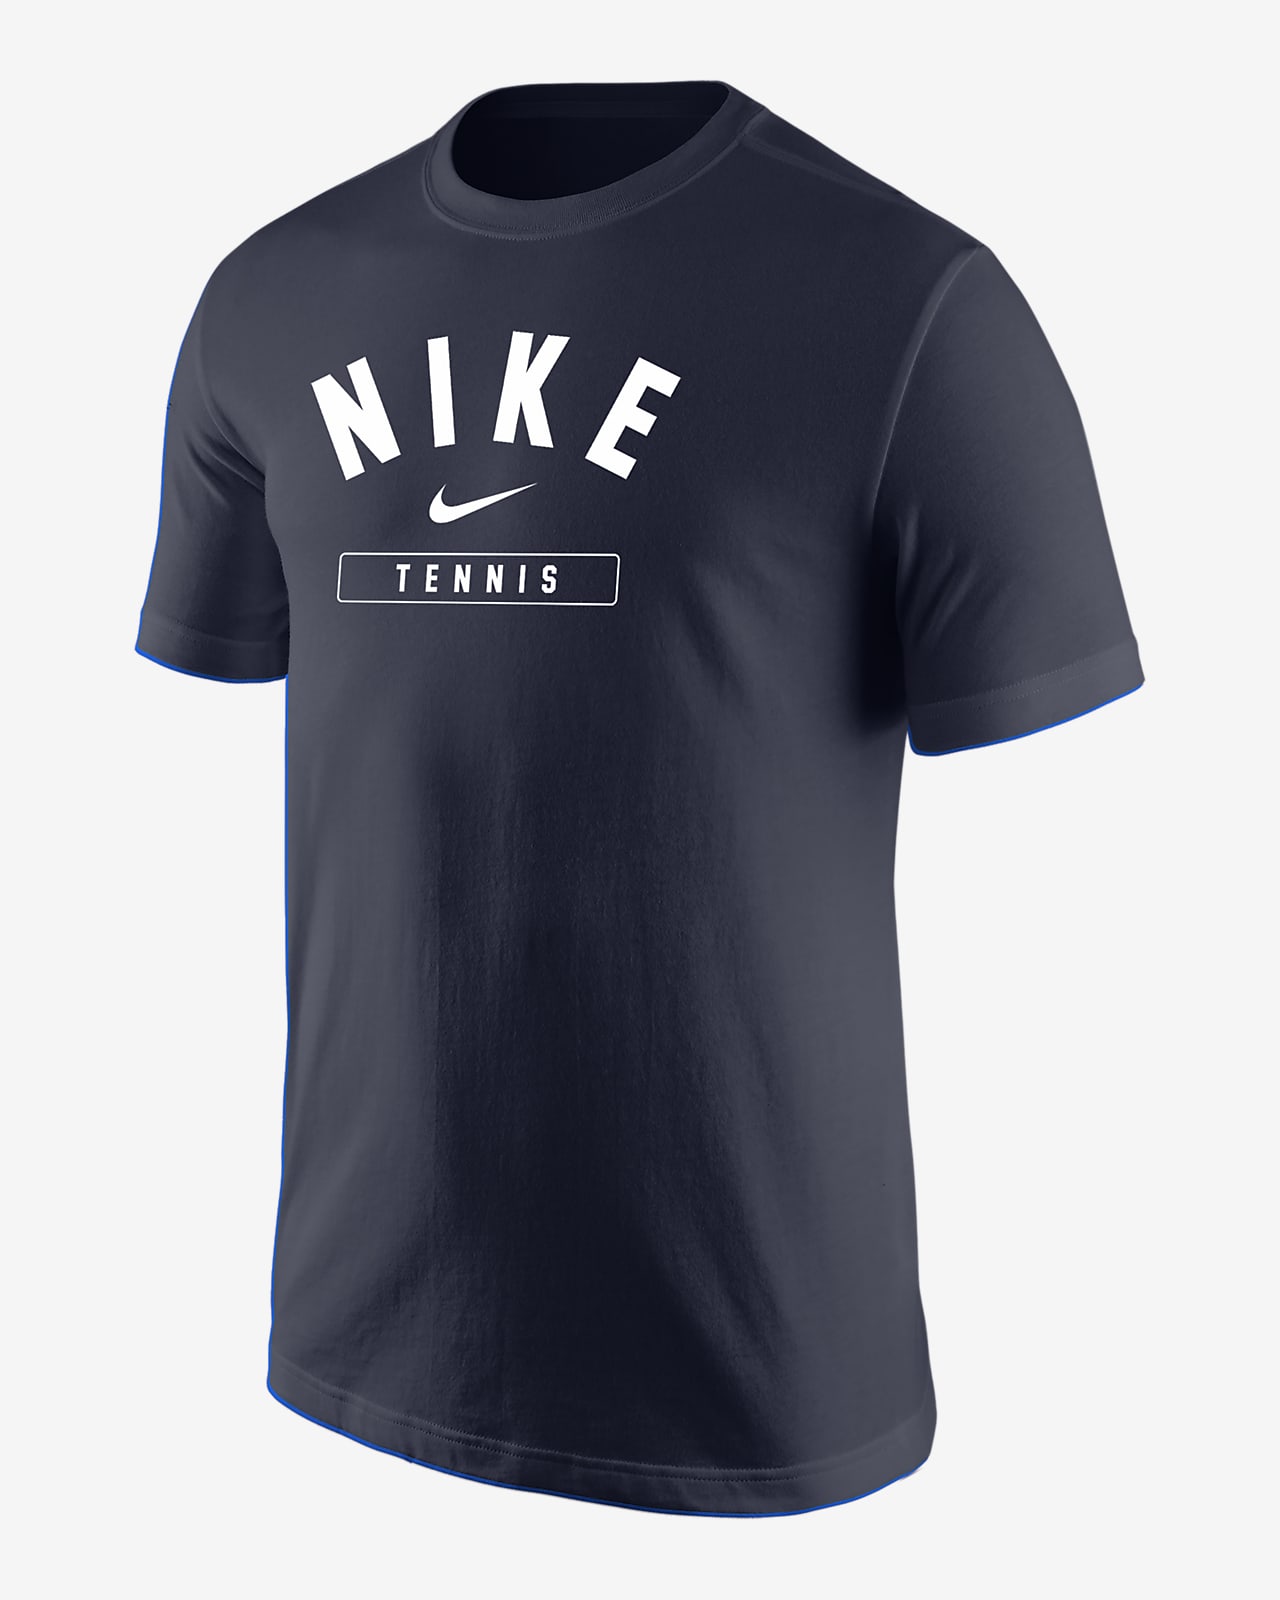 Nike Tennis Men's T-Shirt